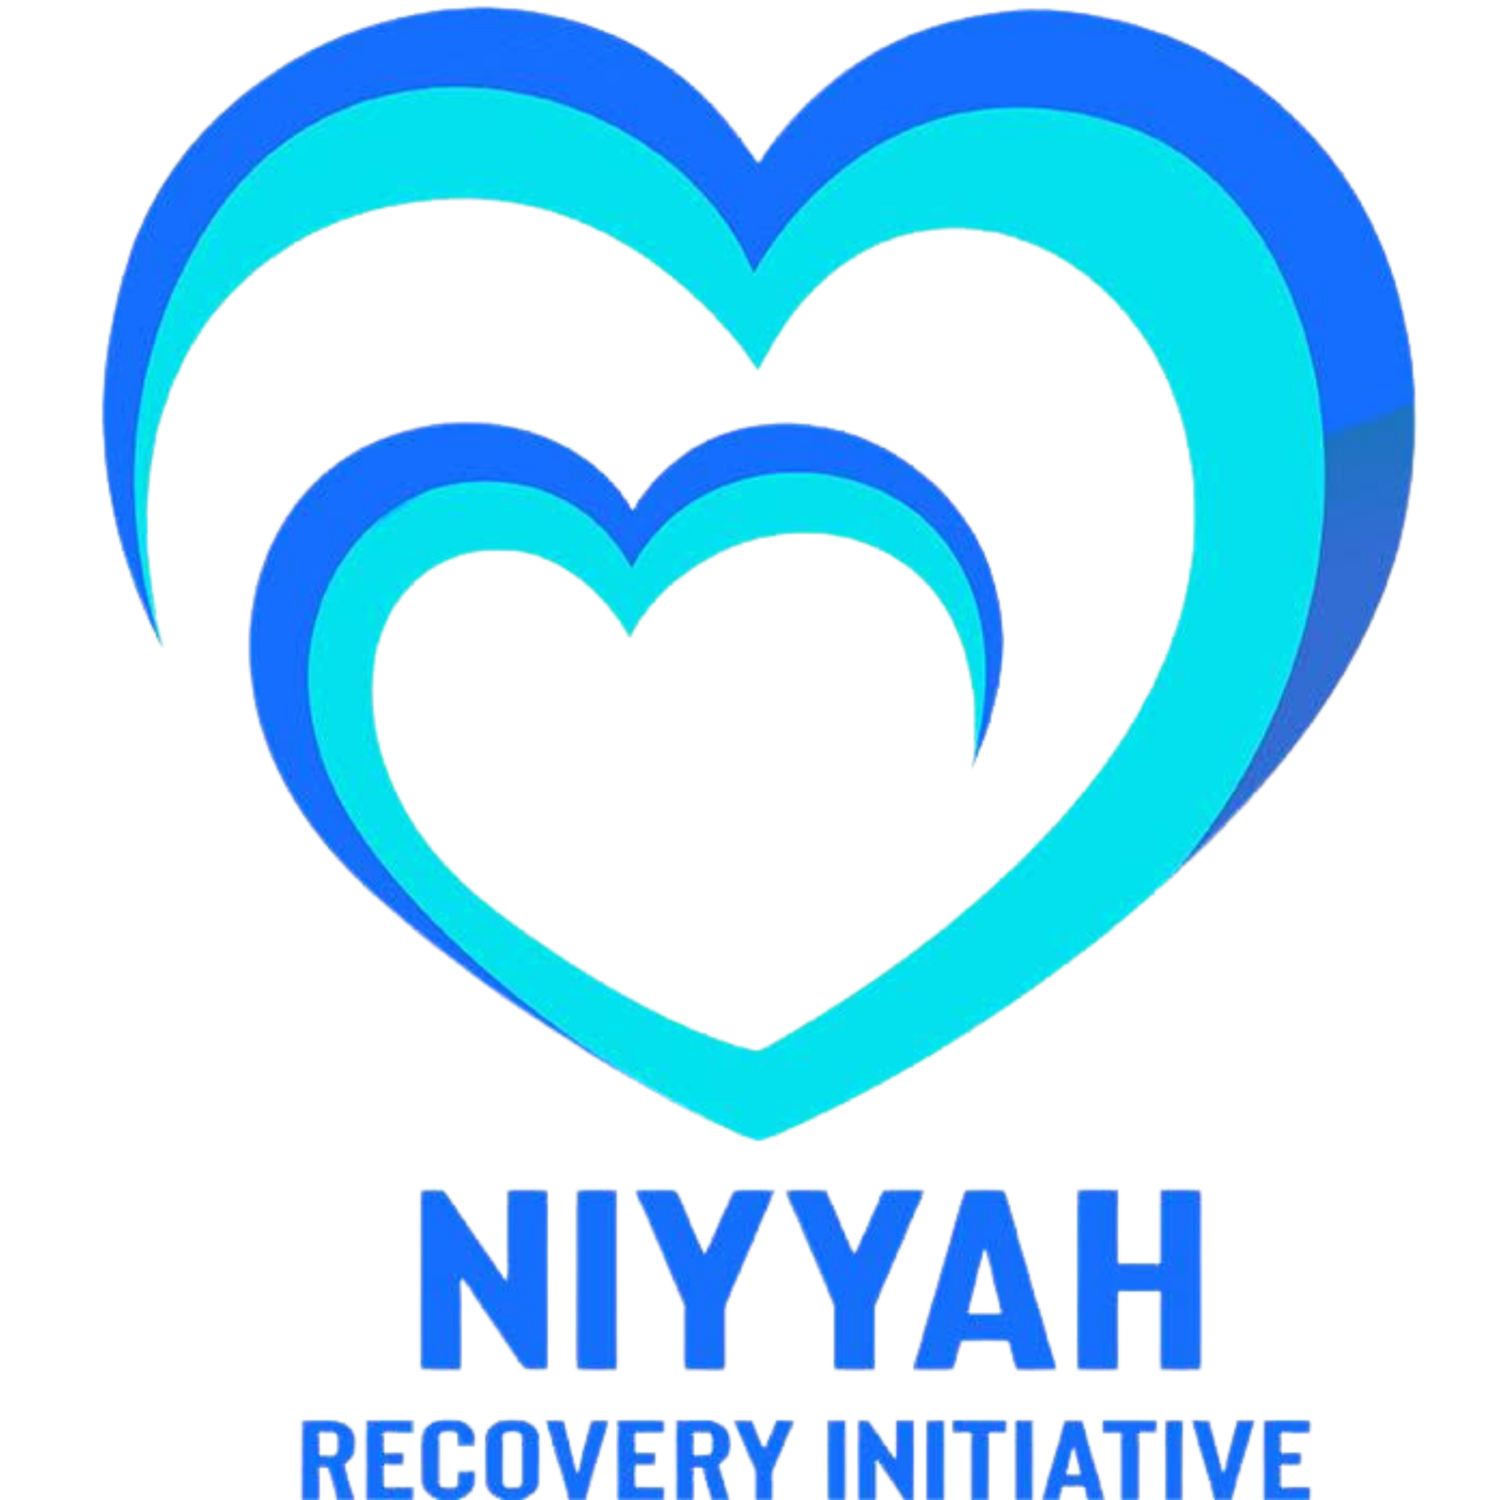 Niyyah Recovery Initiative